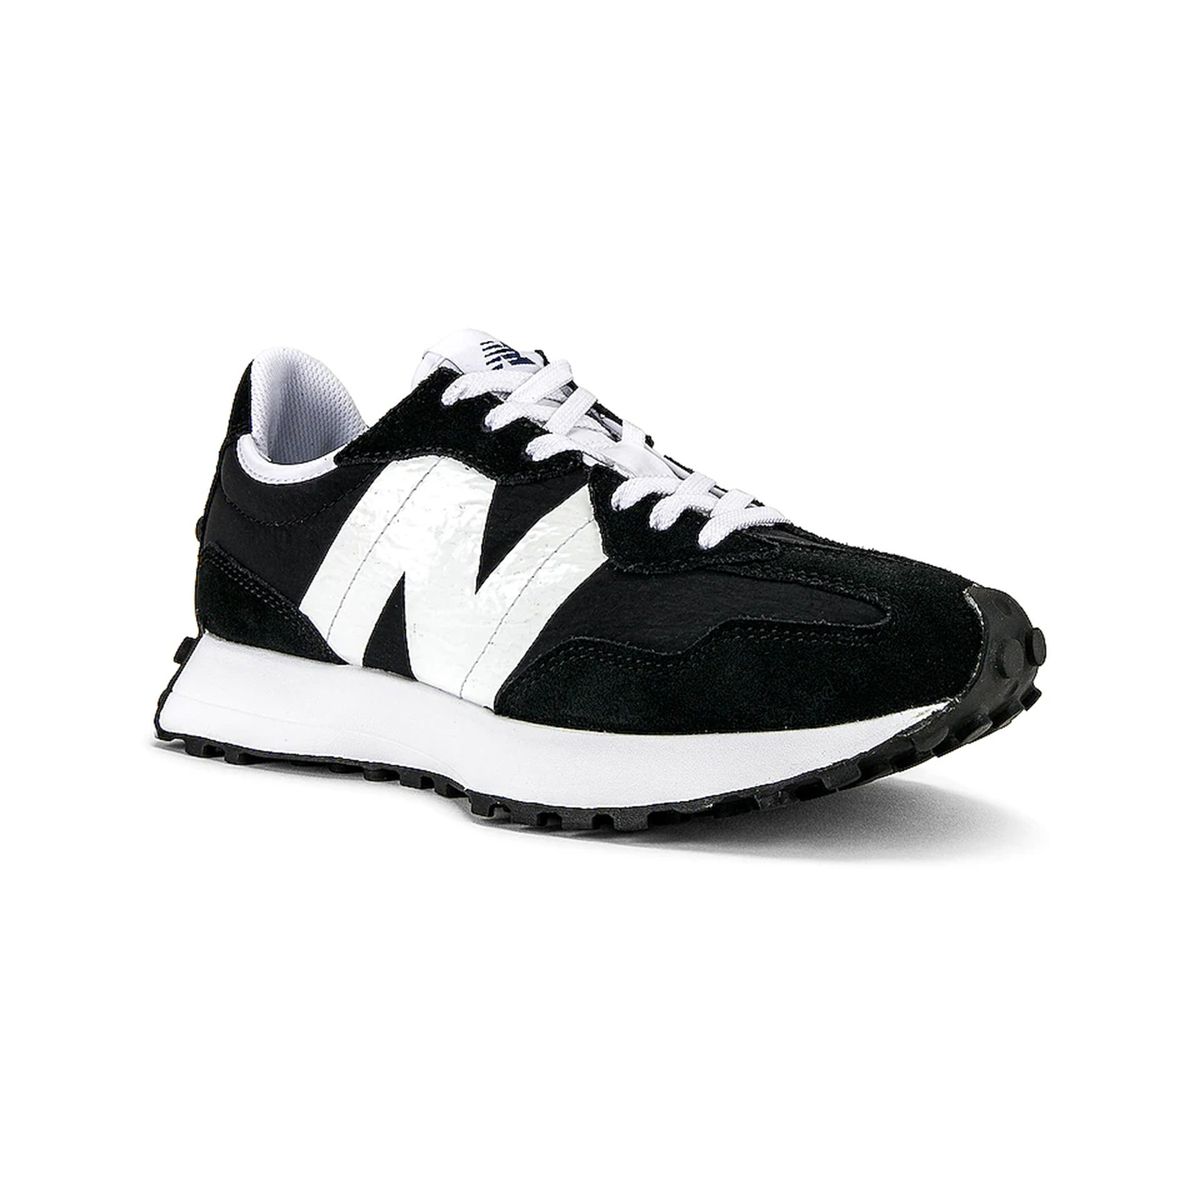 New Balance 327 Sneakers in Black & Summer Fog